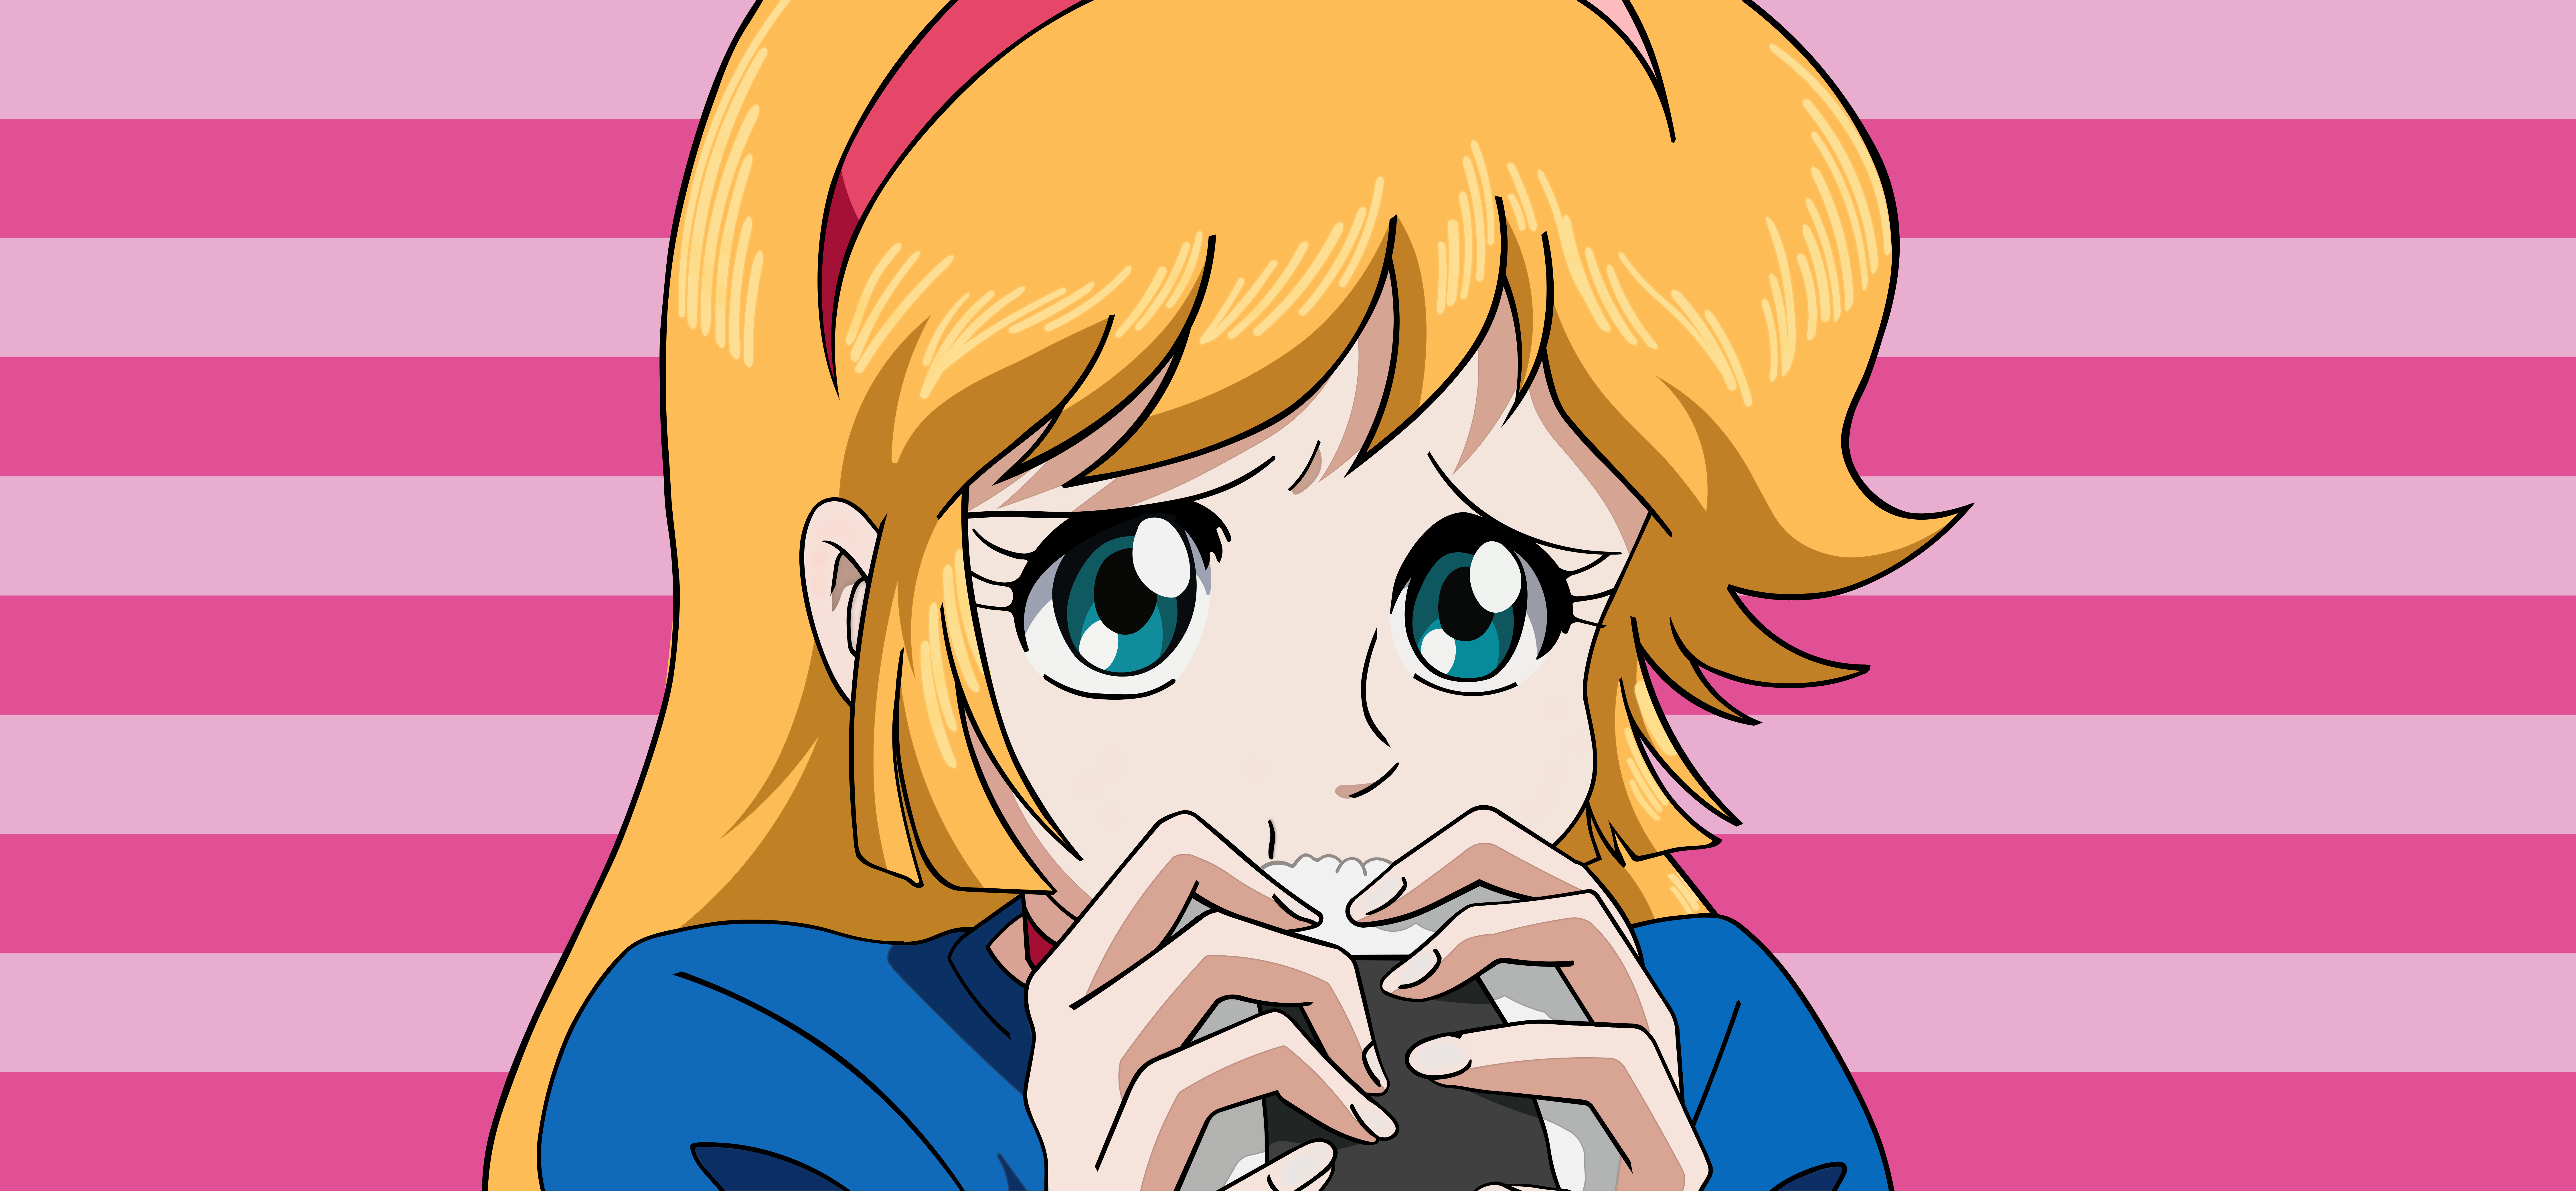 Re Cutie Honey Anime Girls Simple Background Blonde Blue Eyes Minimalism Rice Balls Food Eating 9000x4160